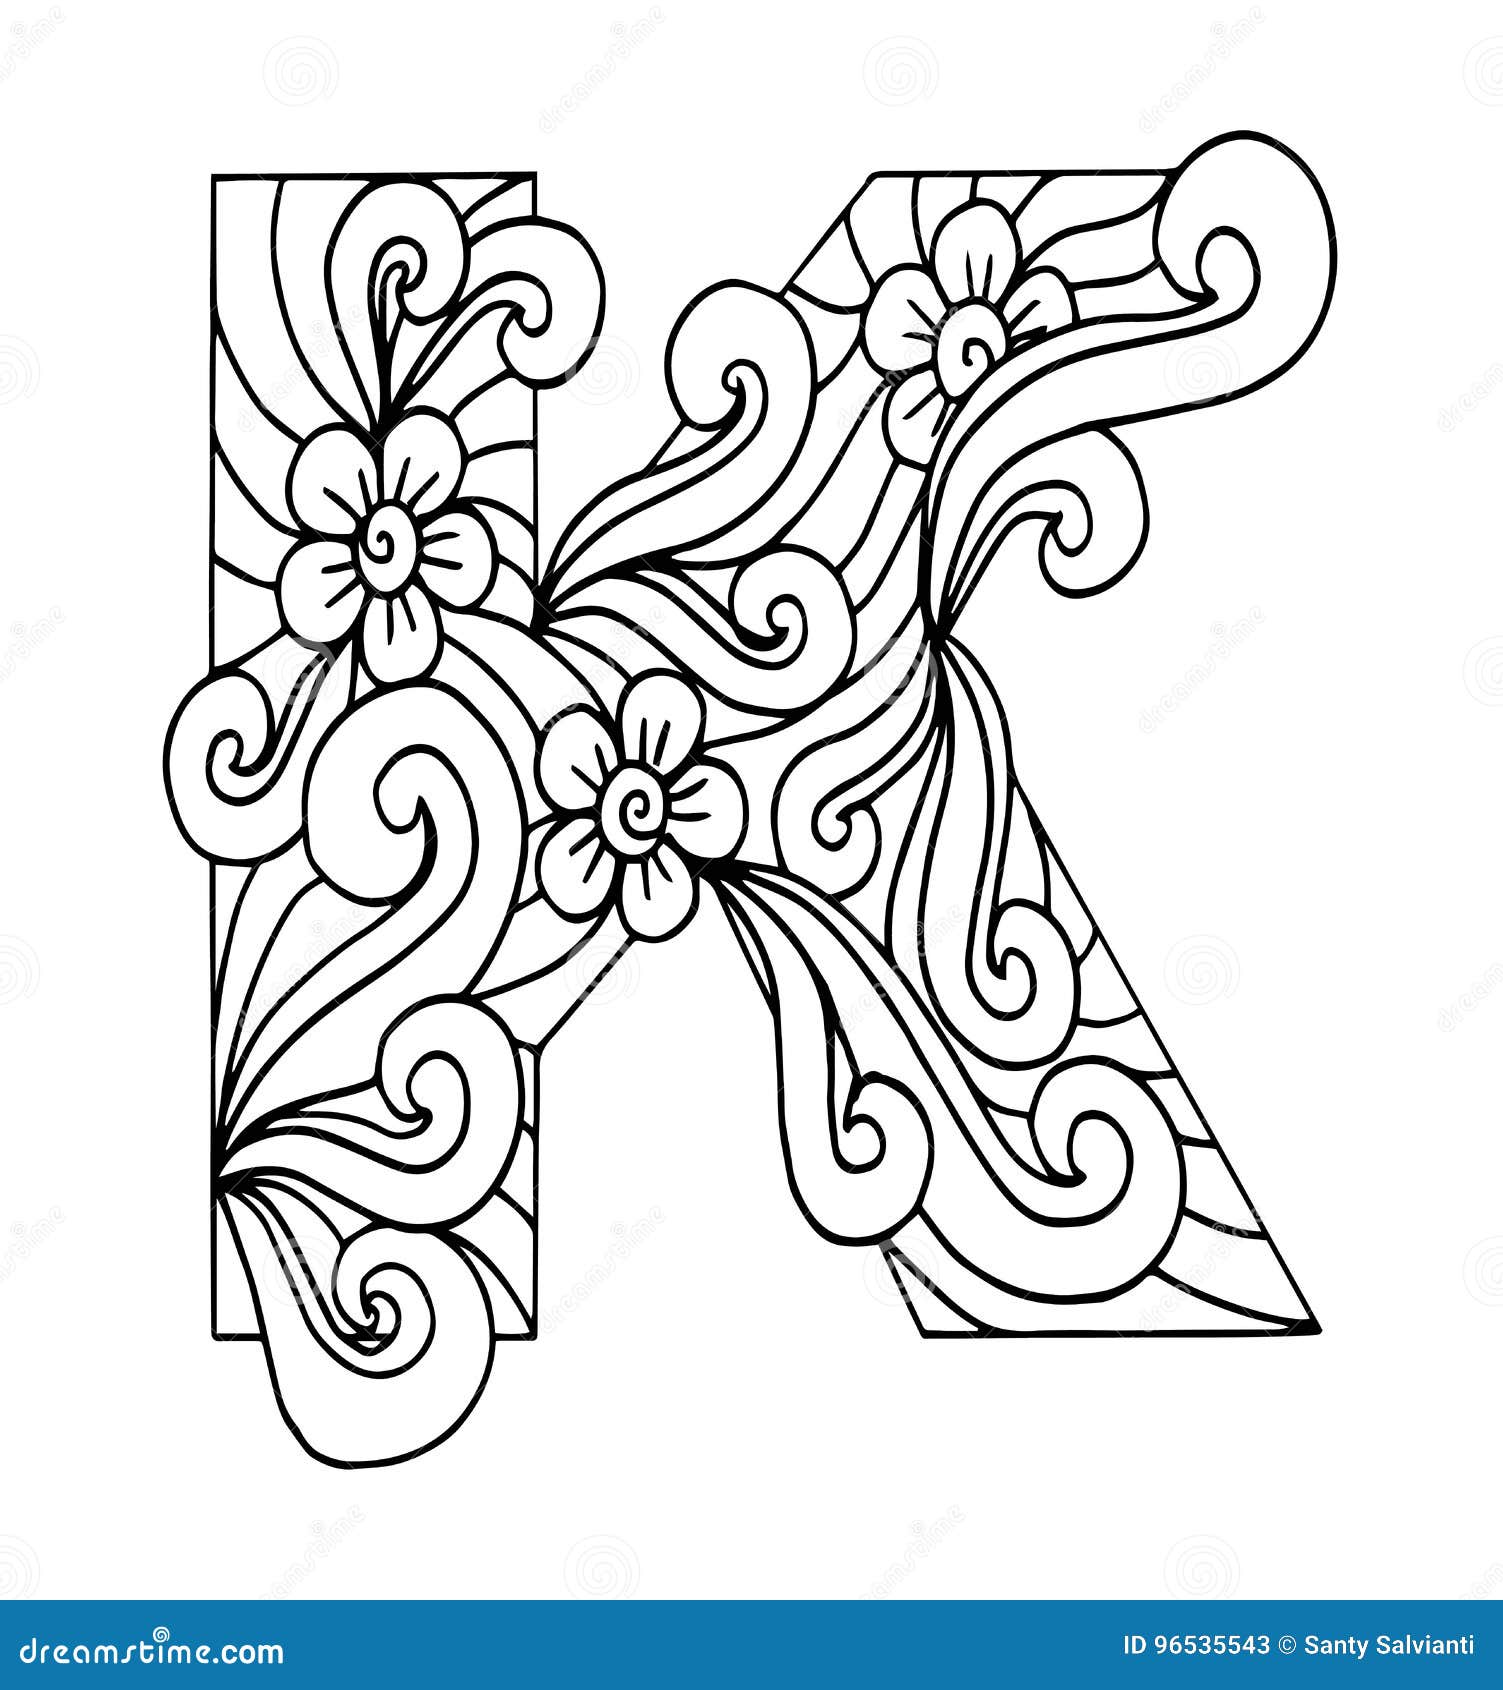 Zentangle Doodle Art Letter K